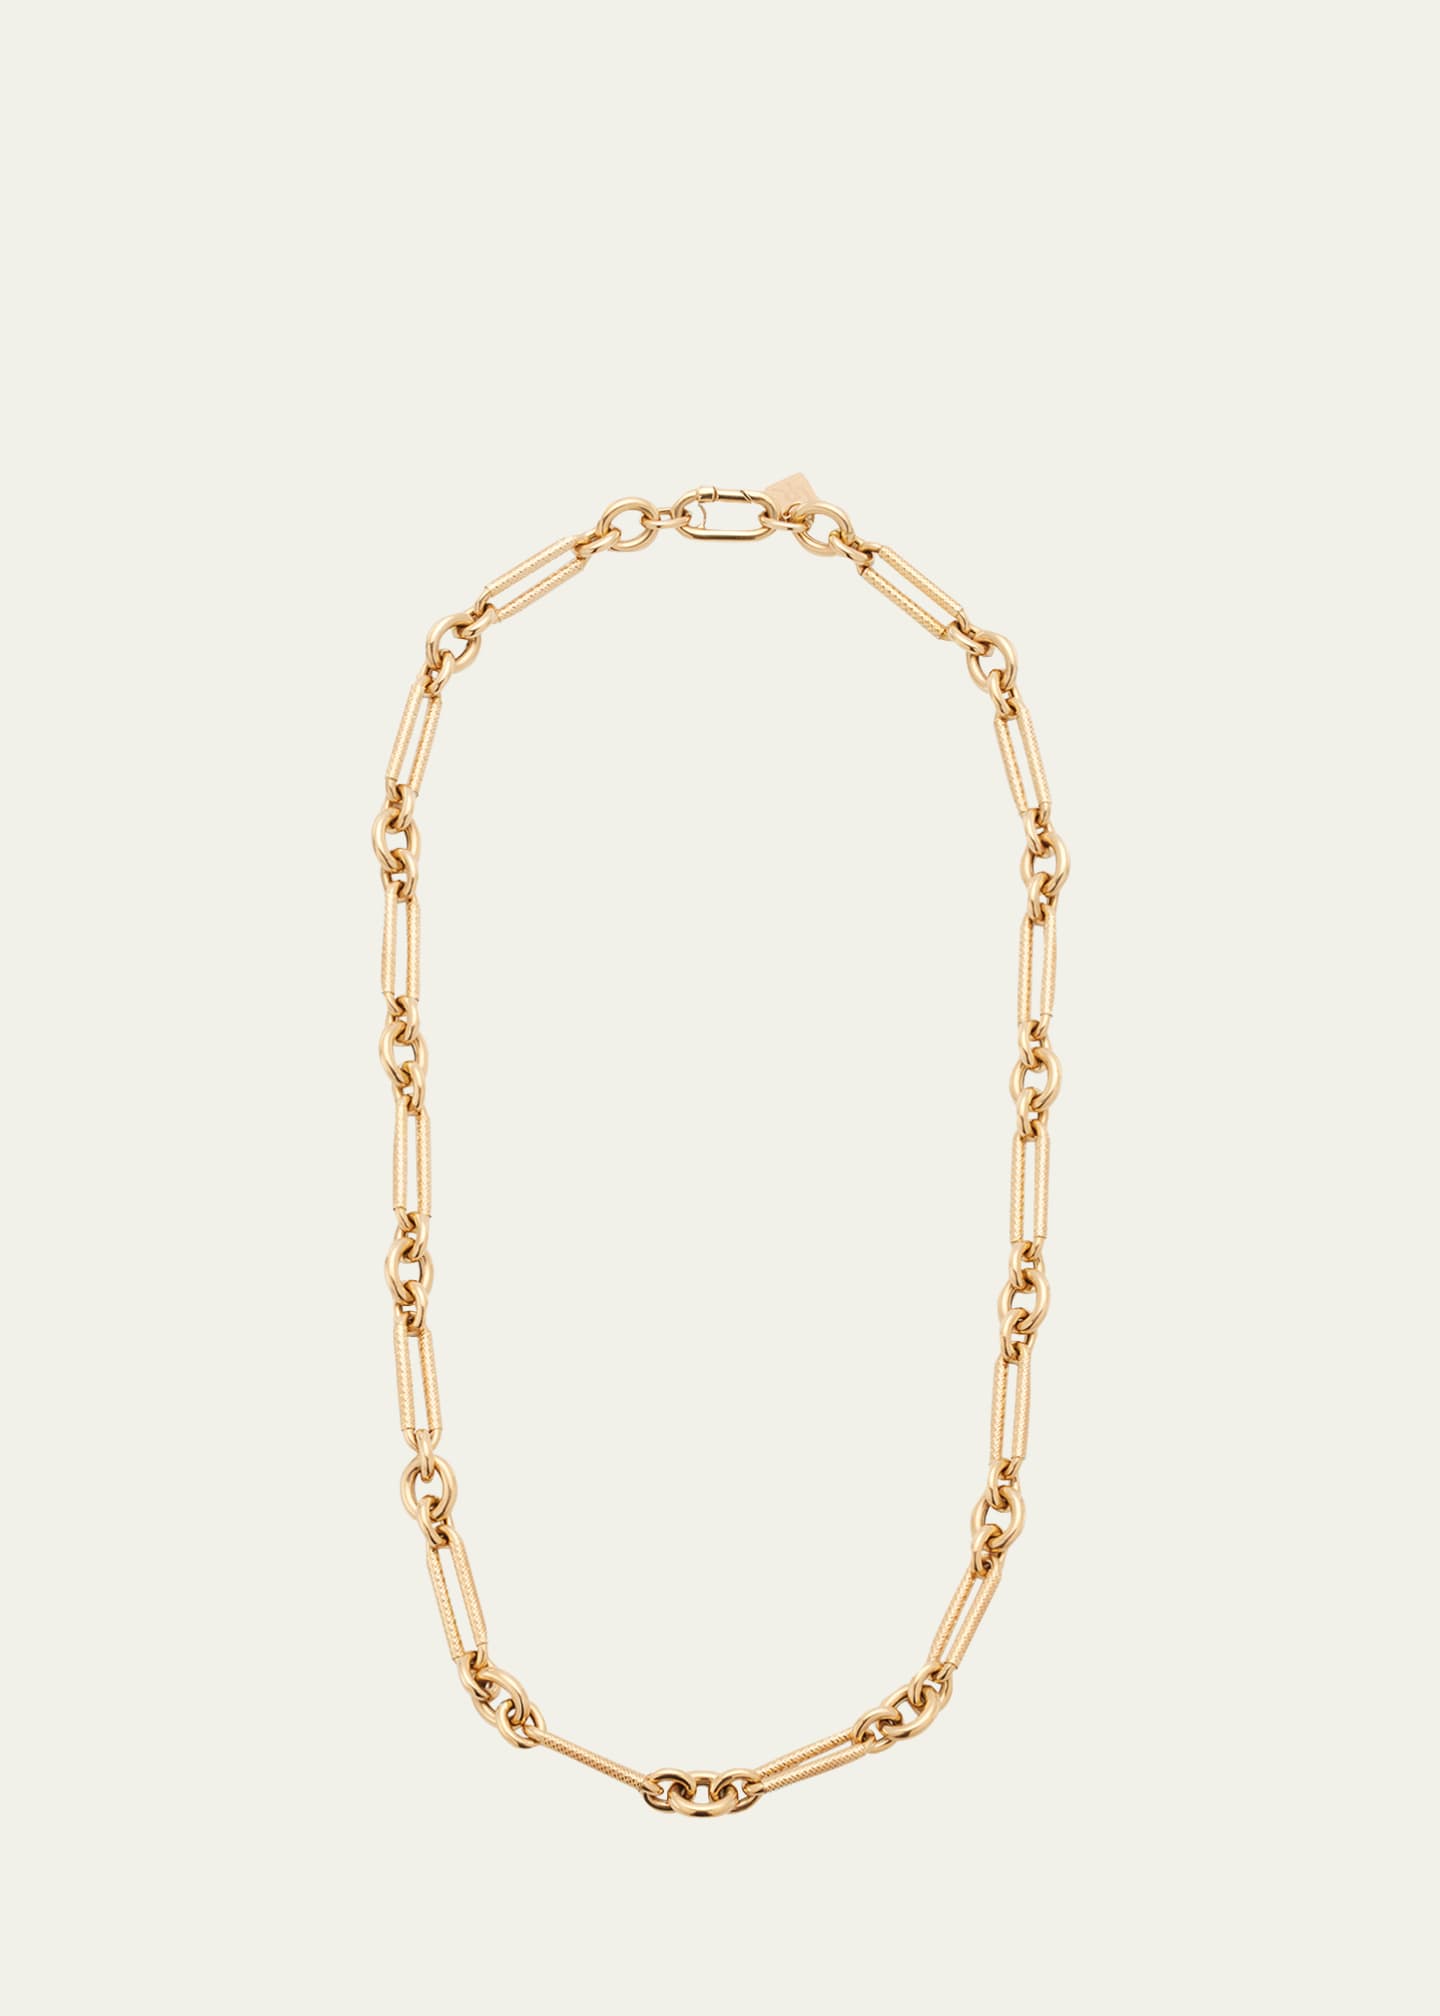 Lauren Rubinski 14K yellow and white gold small chain necklace